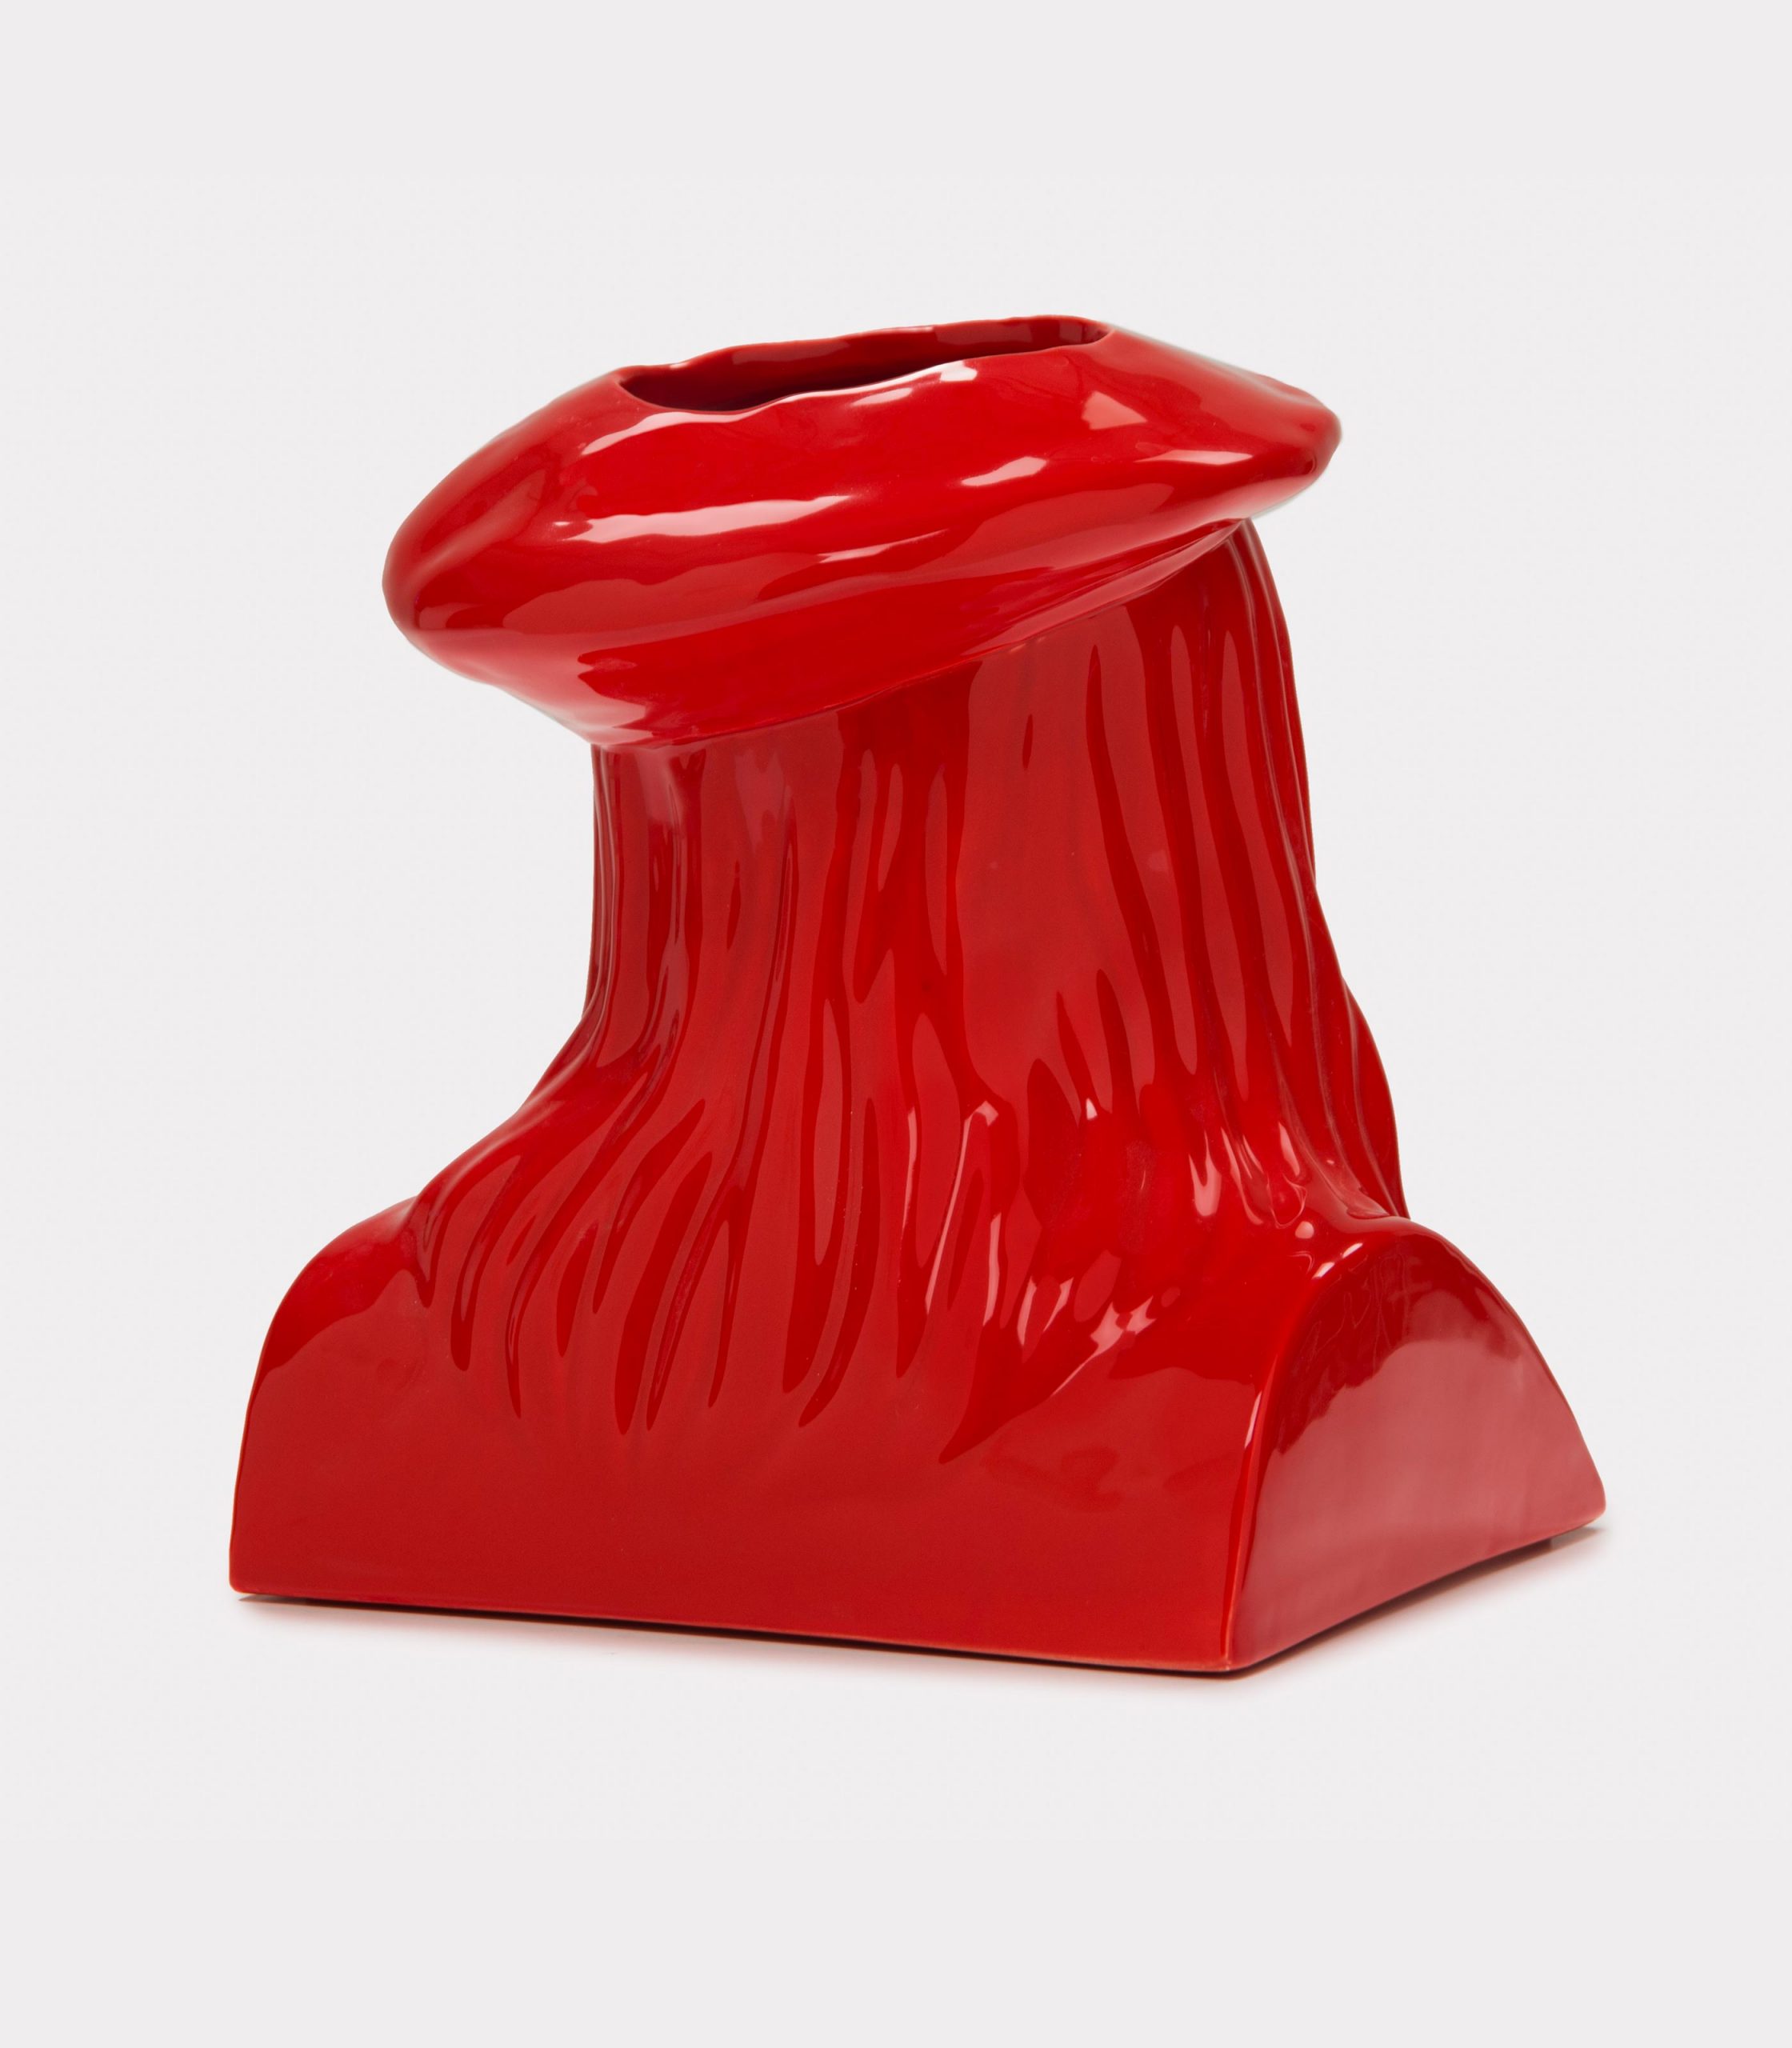 Jimmy D Lanza's "La Vilma", solid red handmade flowerpot loopo milano design R